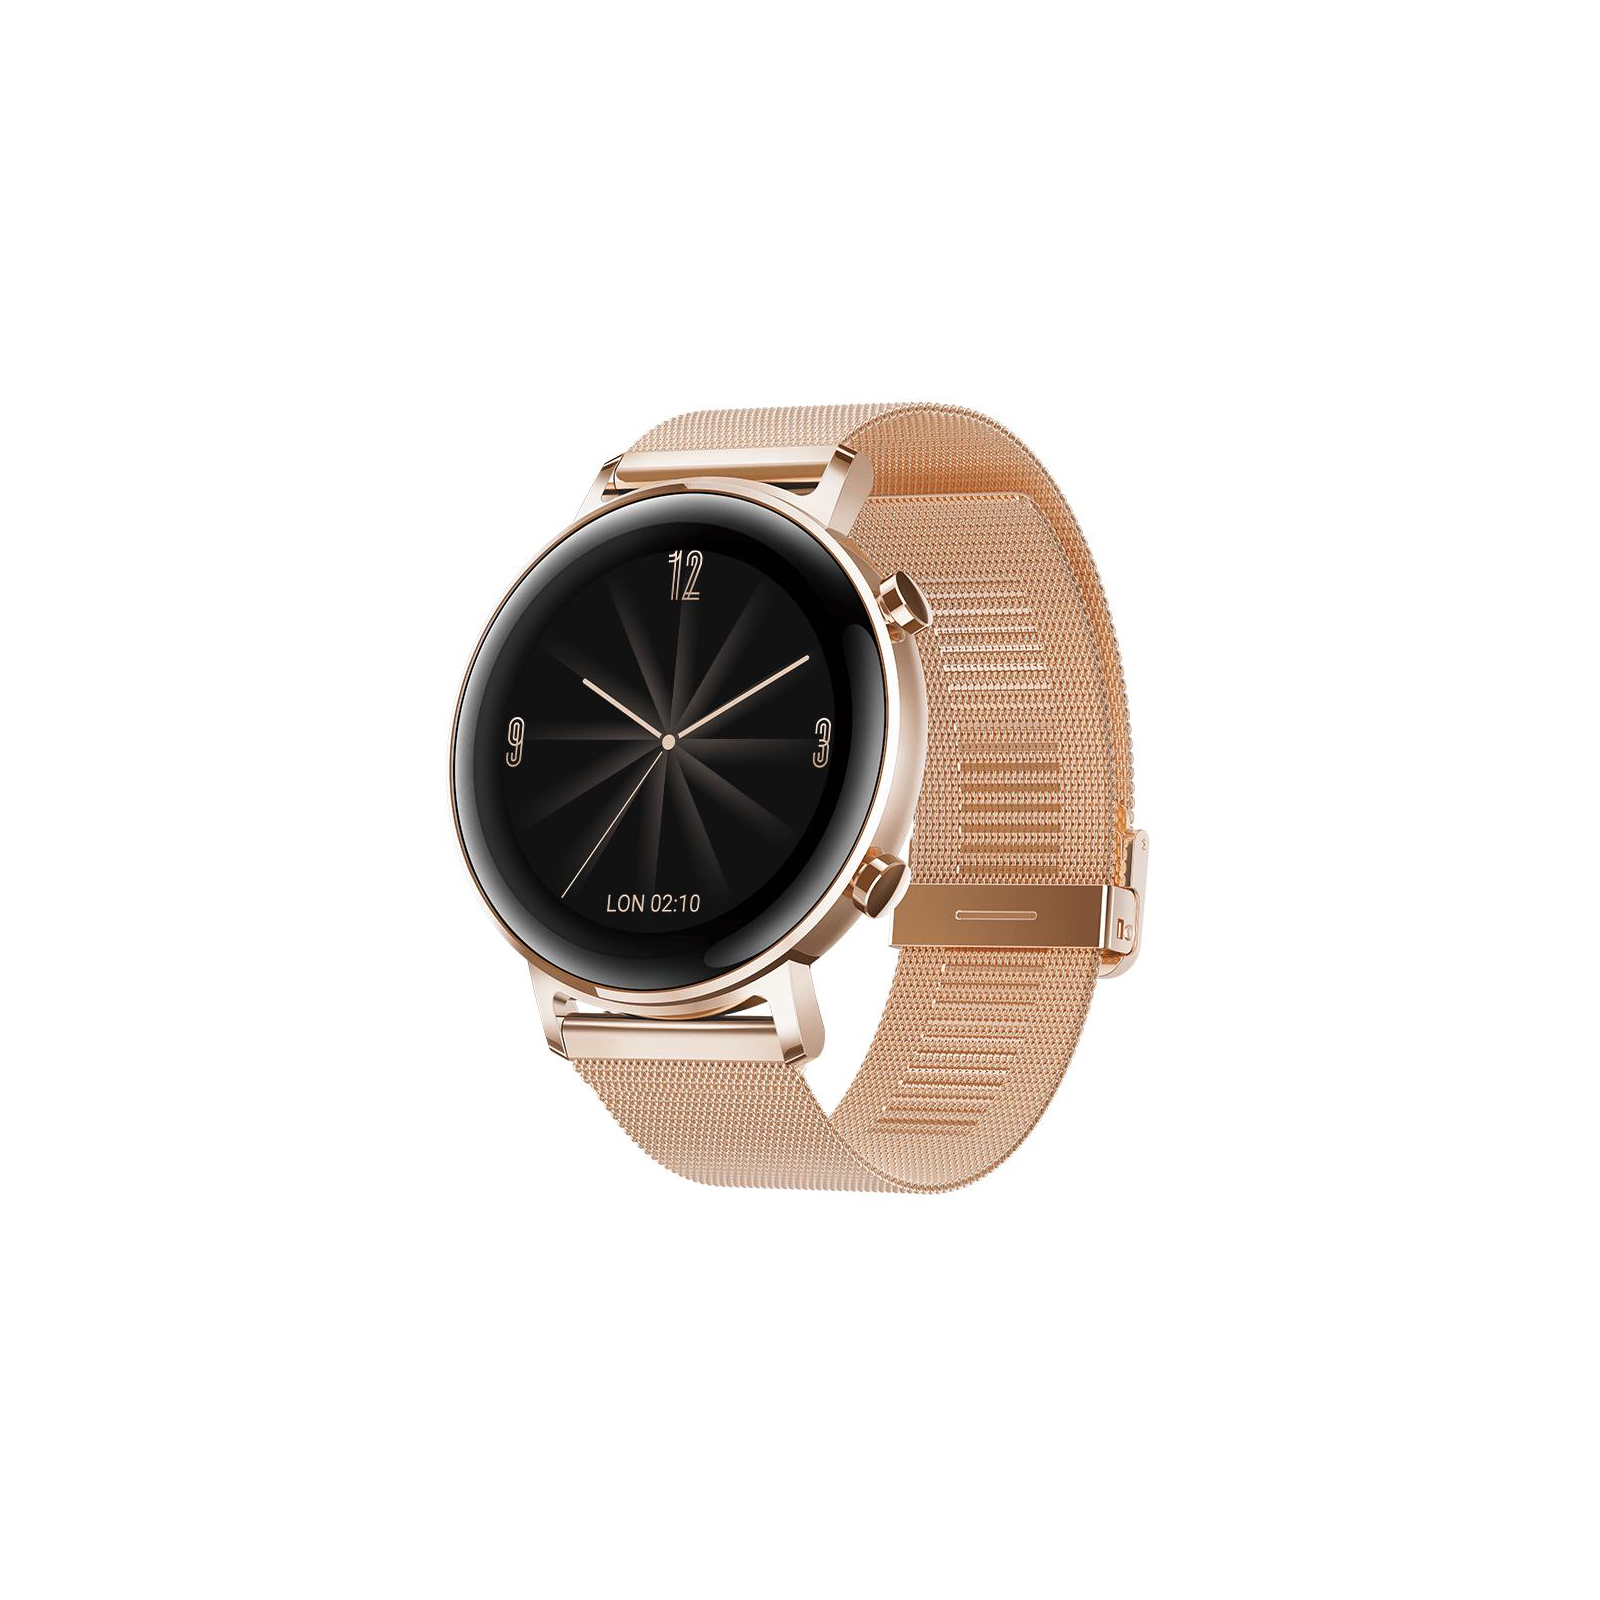 Смарт-часы Huawei Watch GT 2 42mm Refined Gold Elegant Ed (Diana-B19B) (55024610) изображение 6